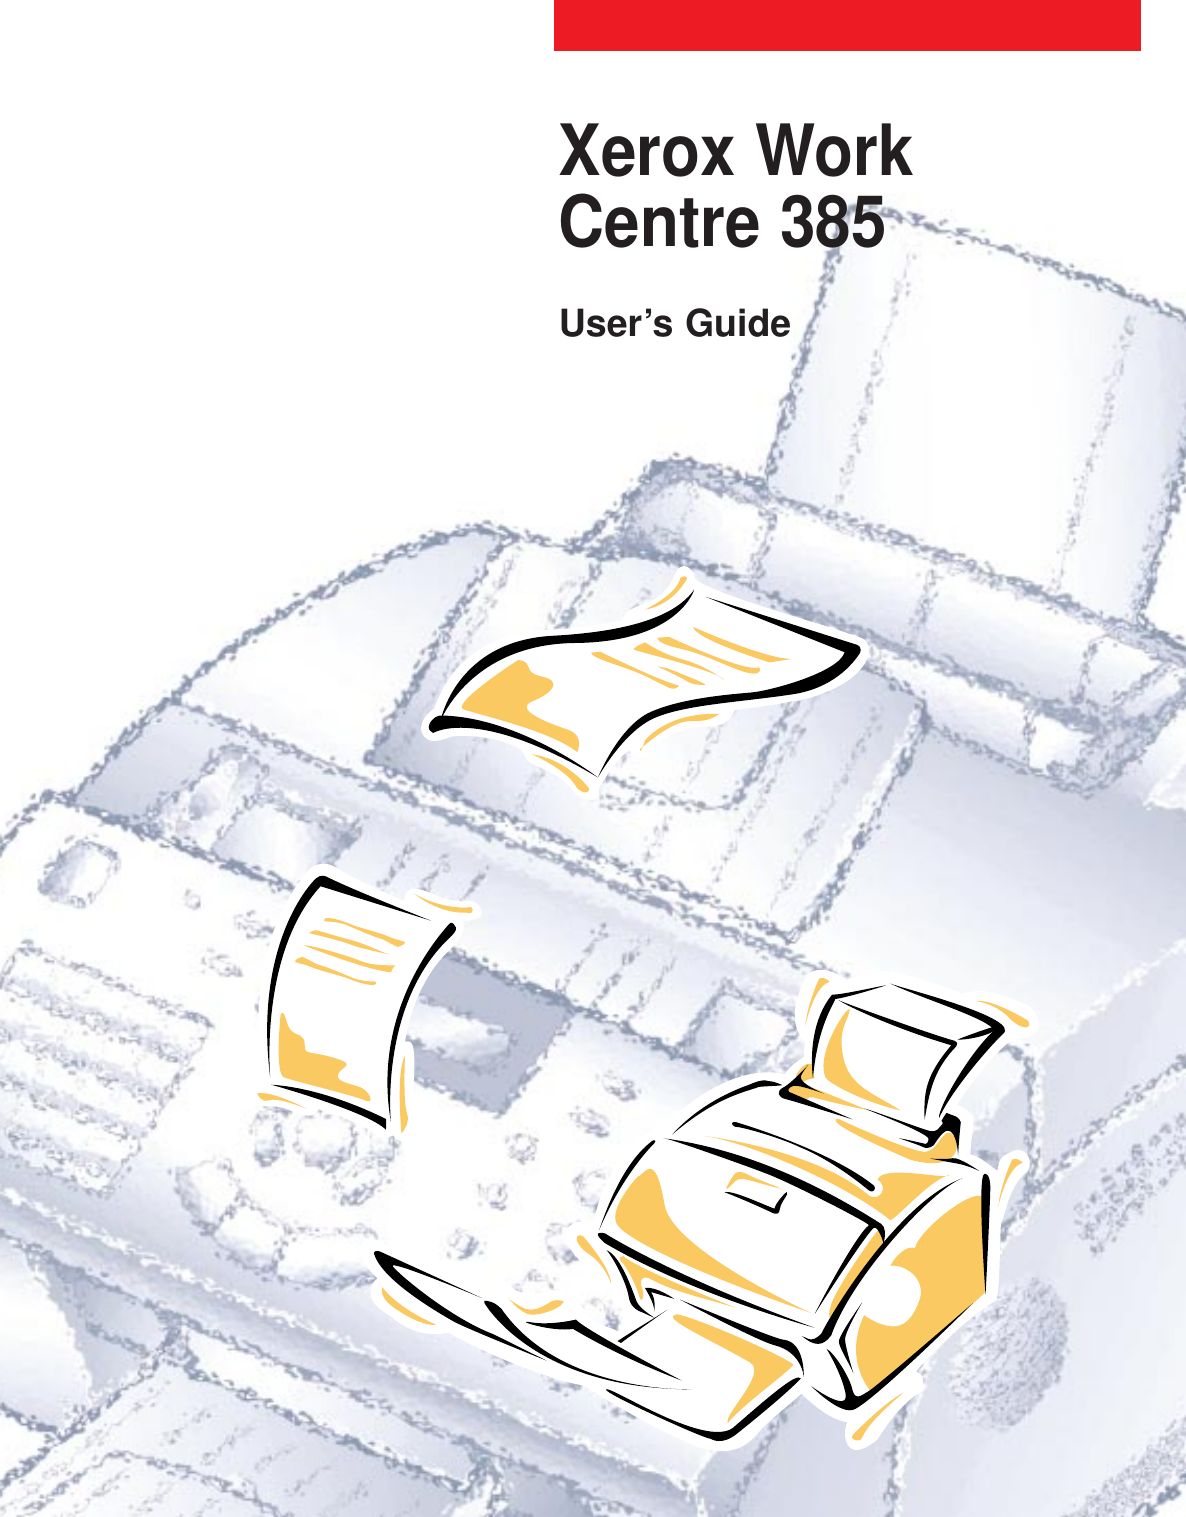 Xerox Work Centre 385User’s Guide